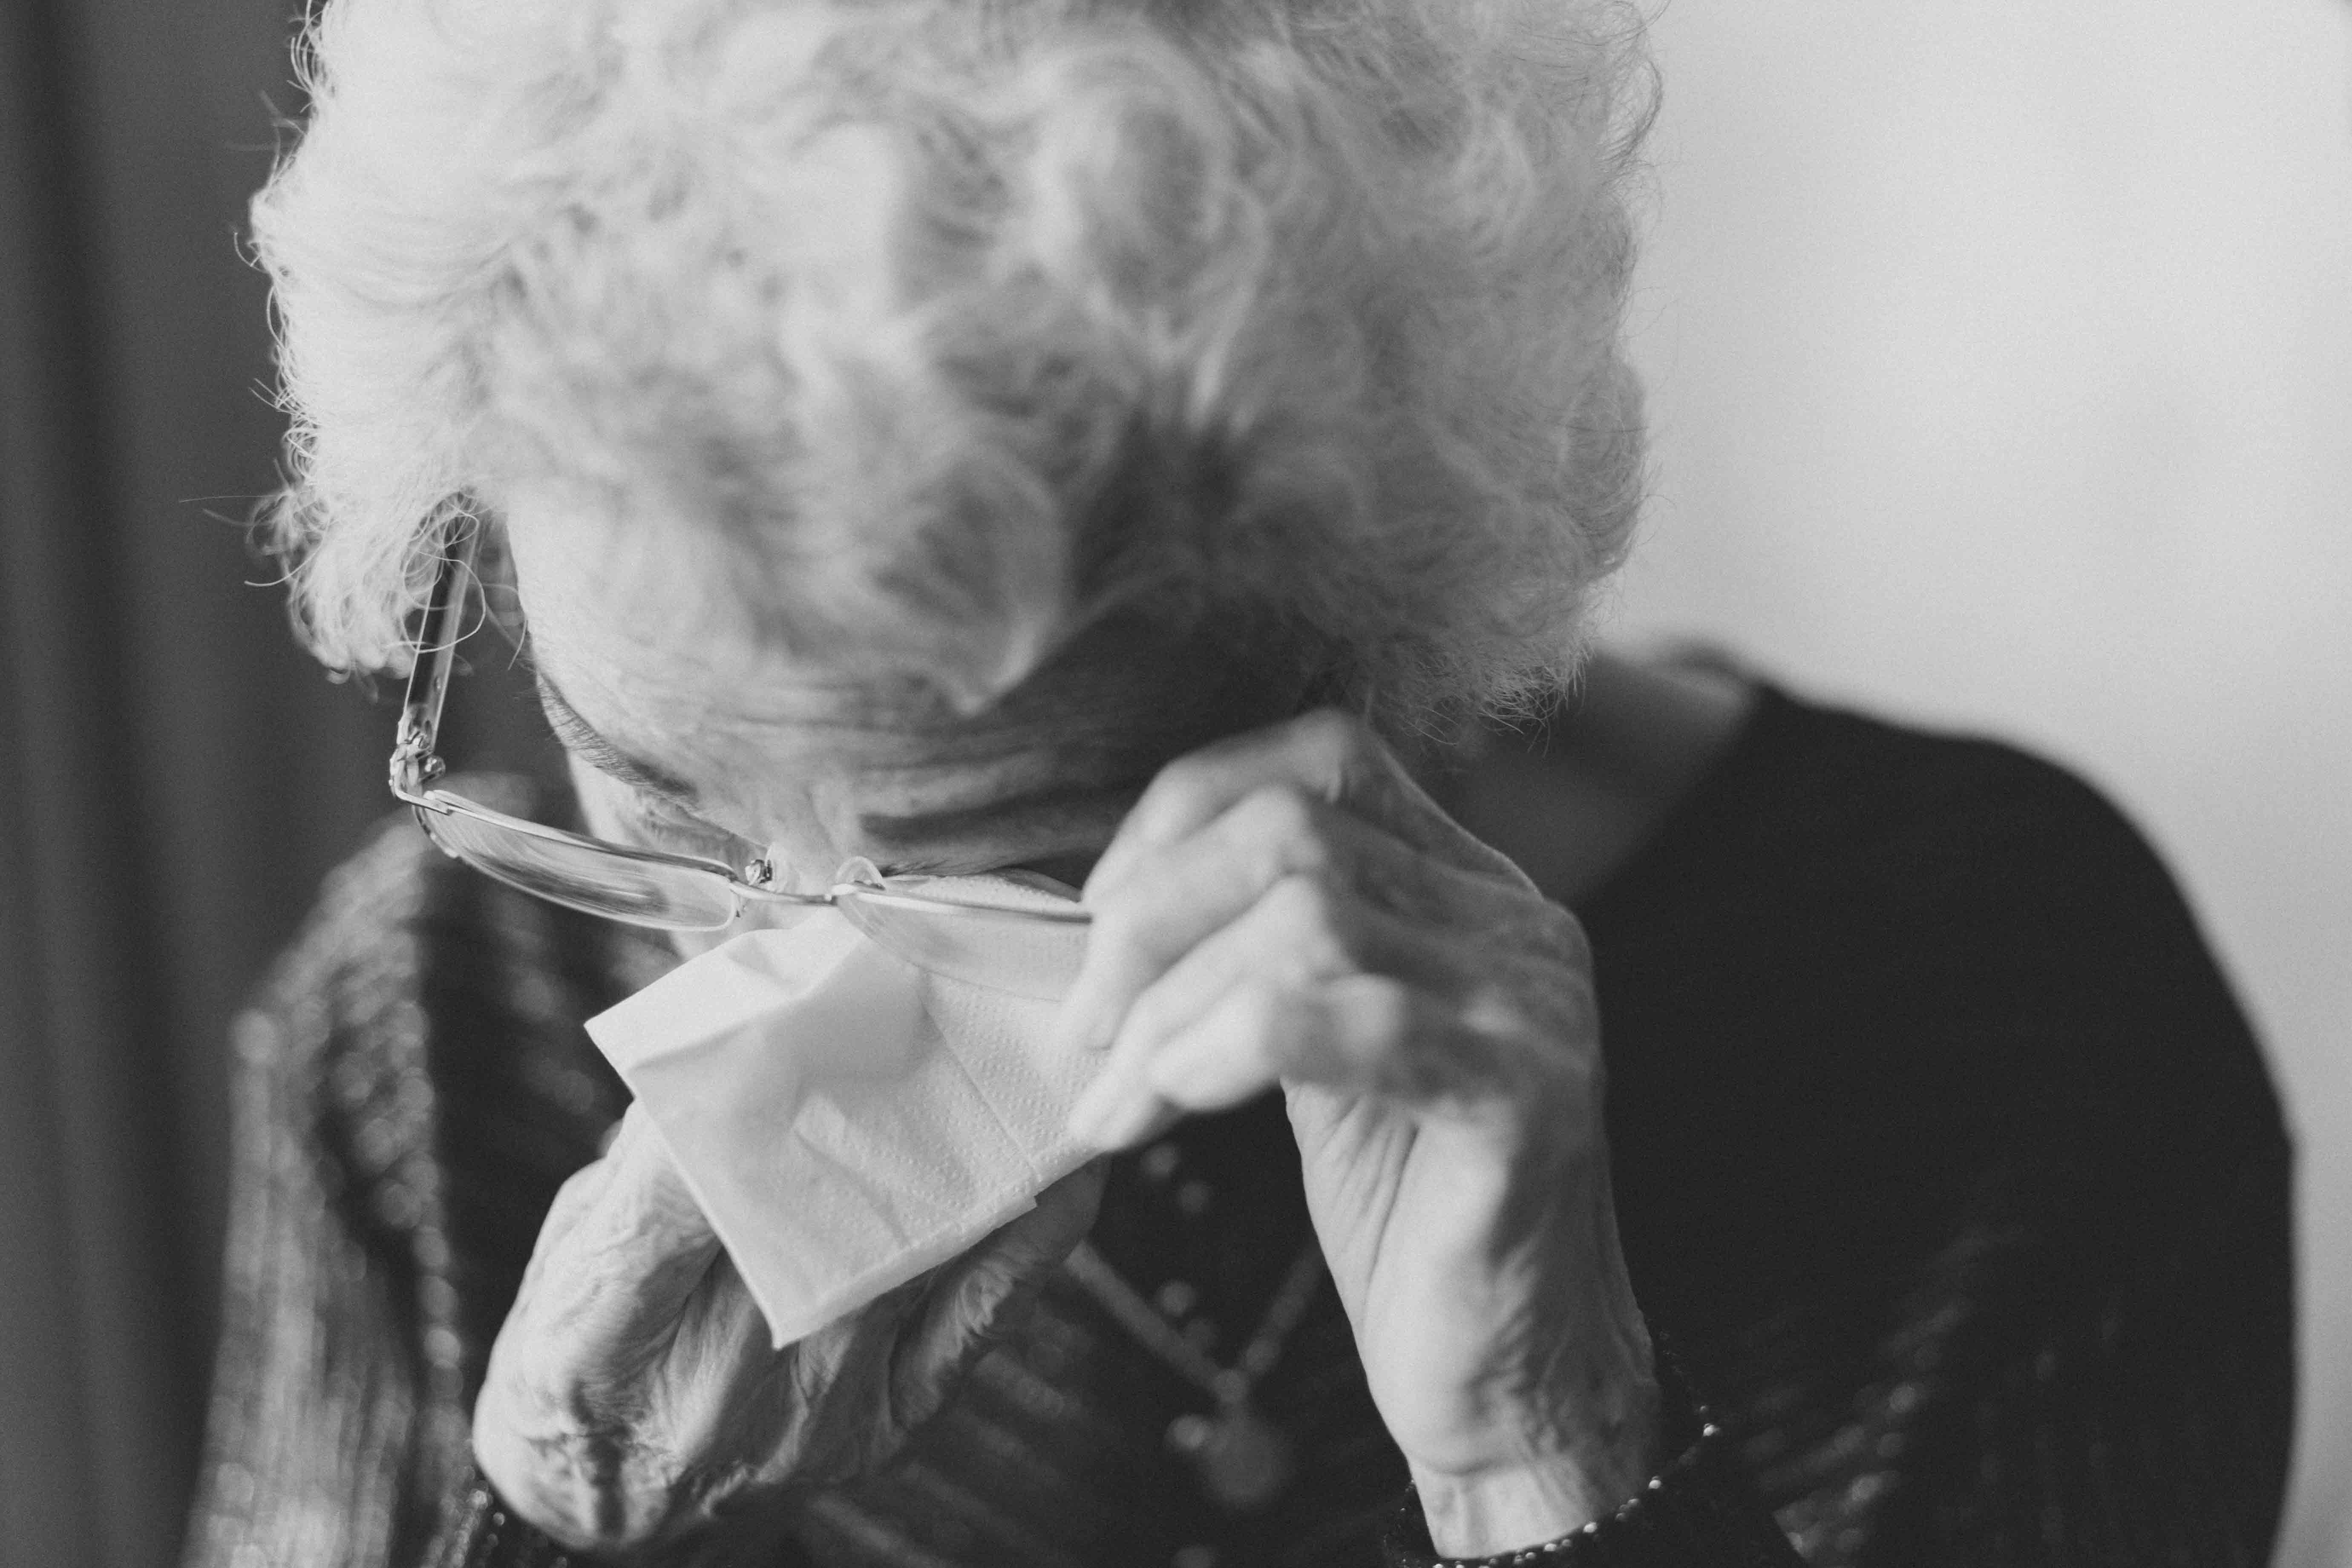 OP's grandma becomes emotional after hearing her husband talk | Photo: Unsplash